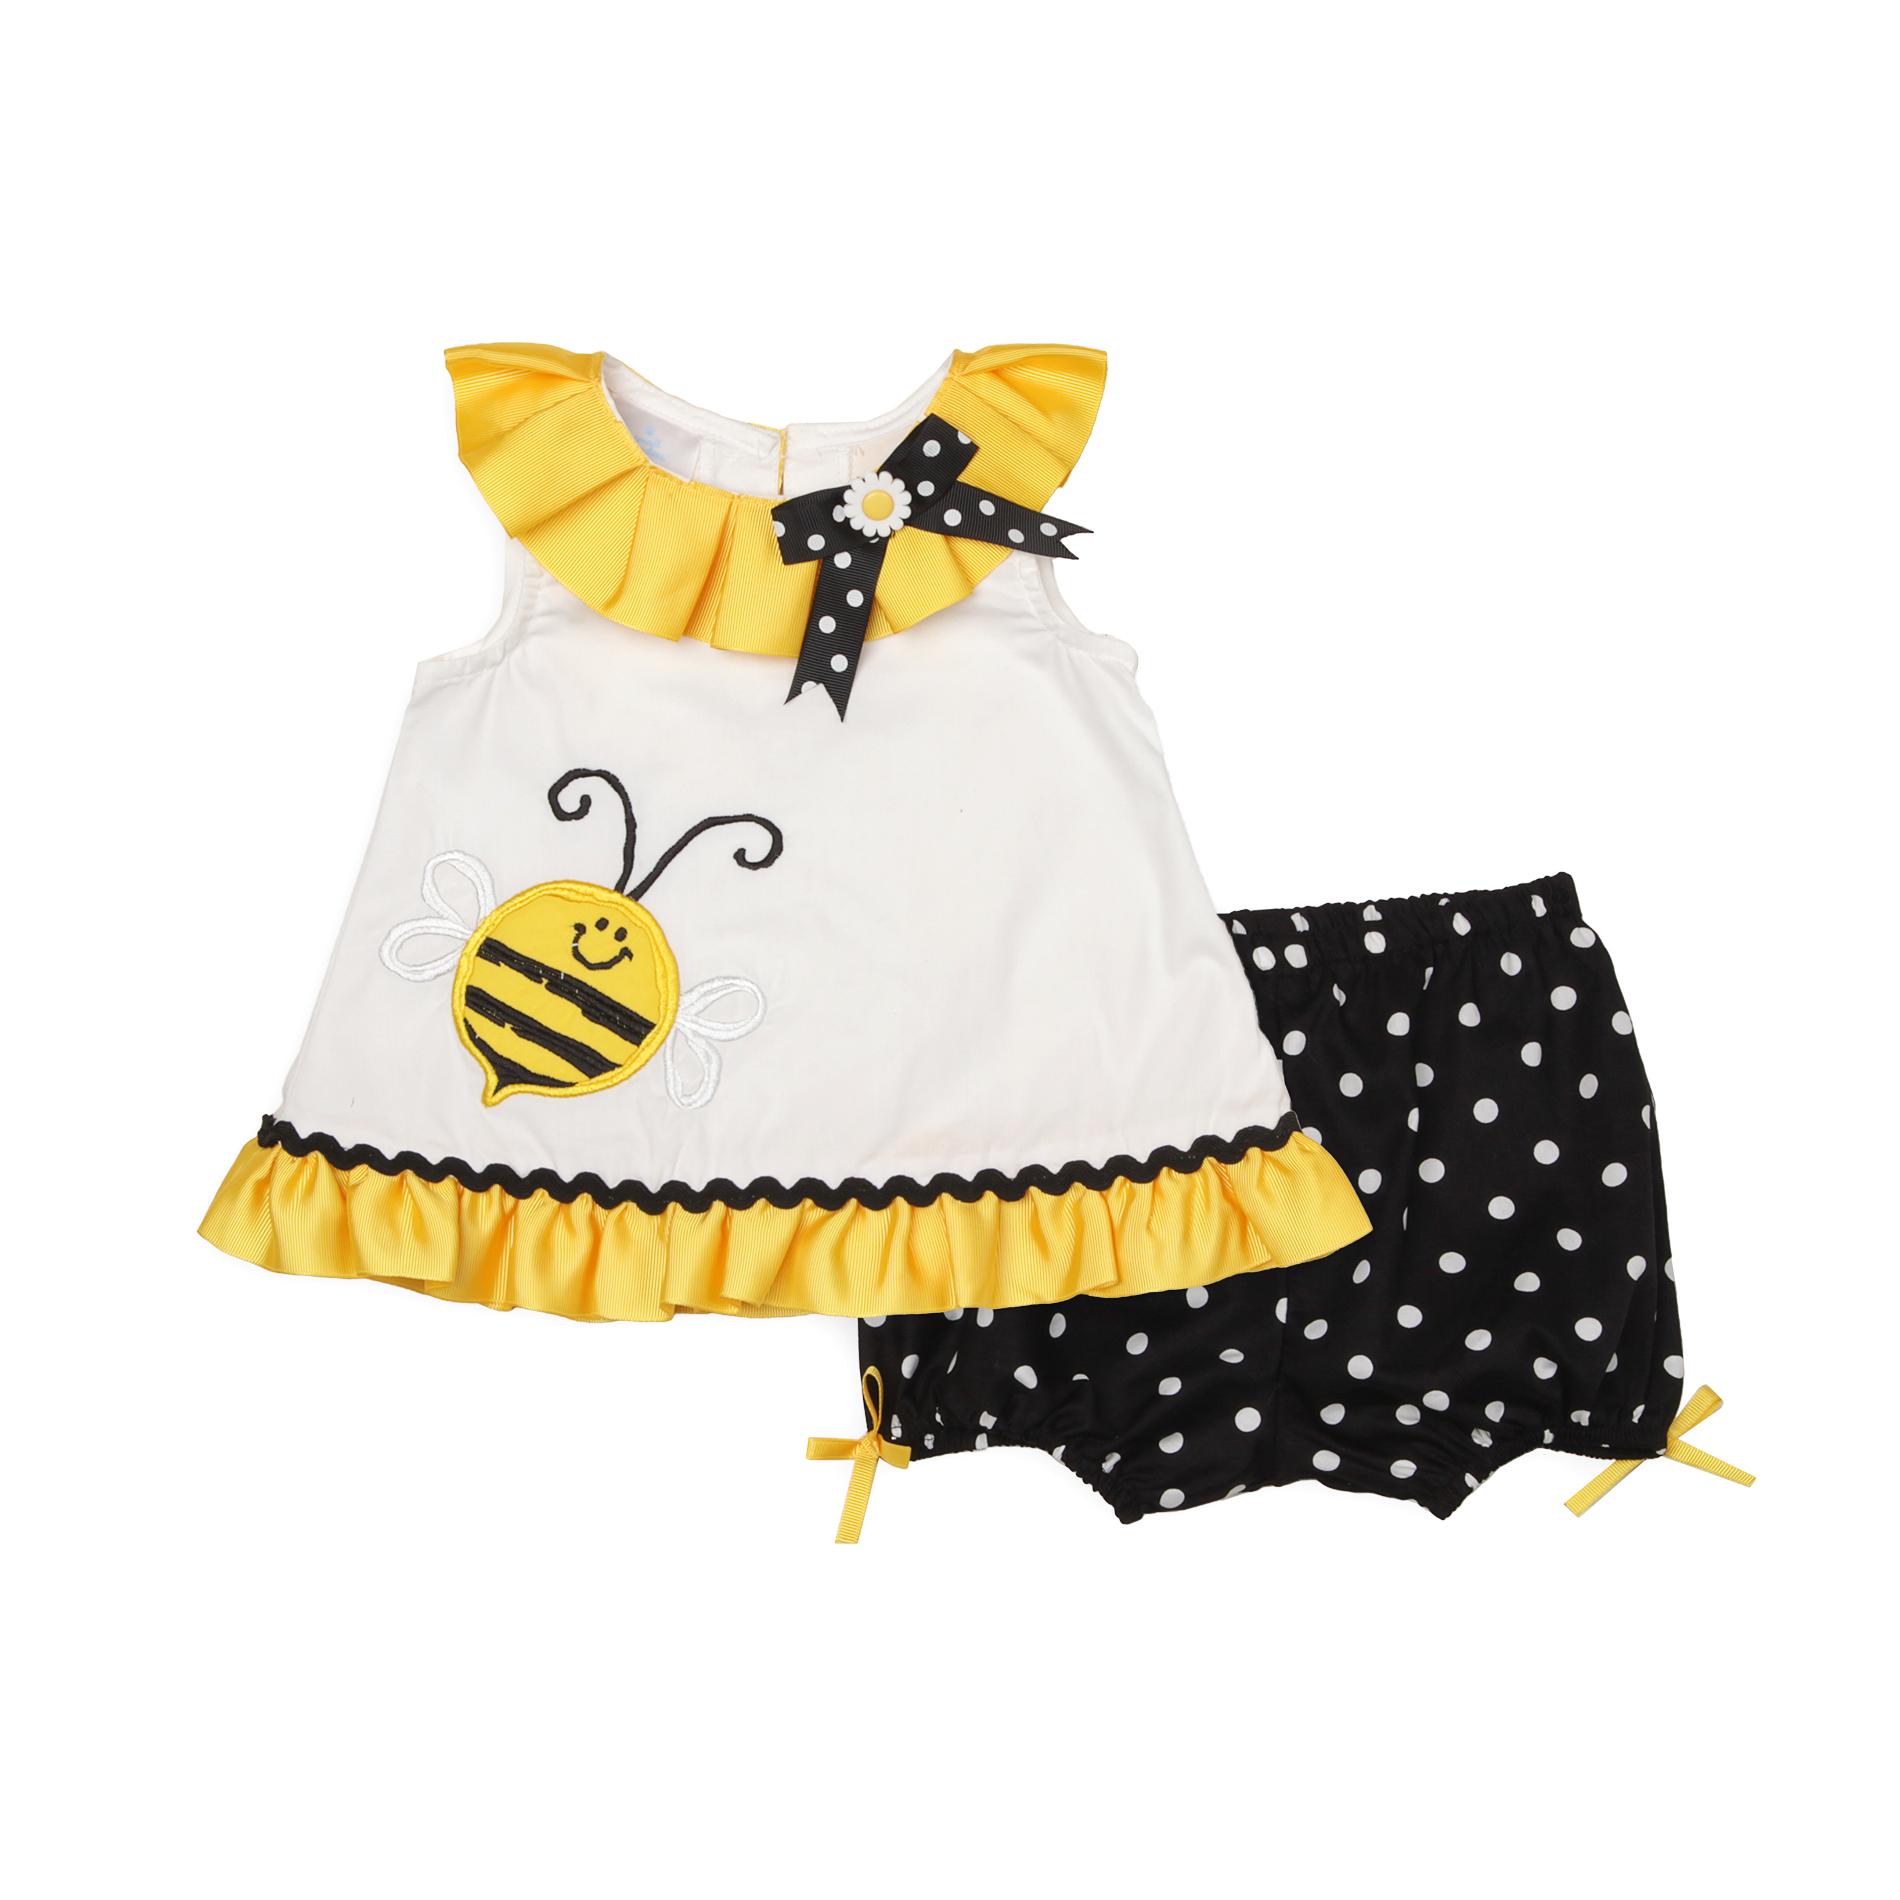 Small Wonders Newborn Girl's Tunic Top & Diaper Cover - Bee